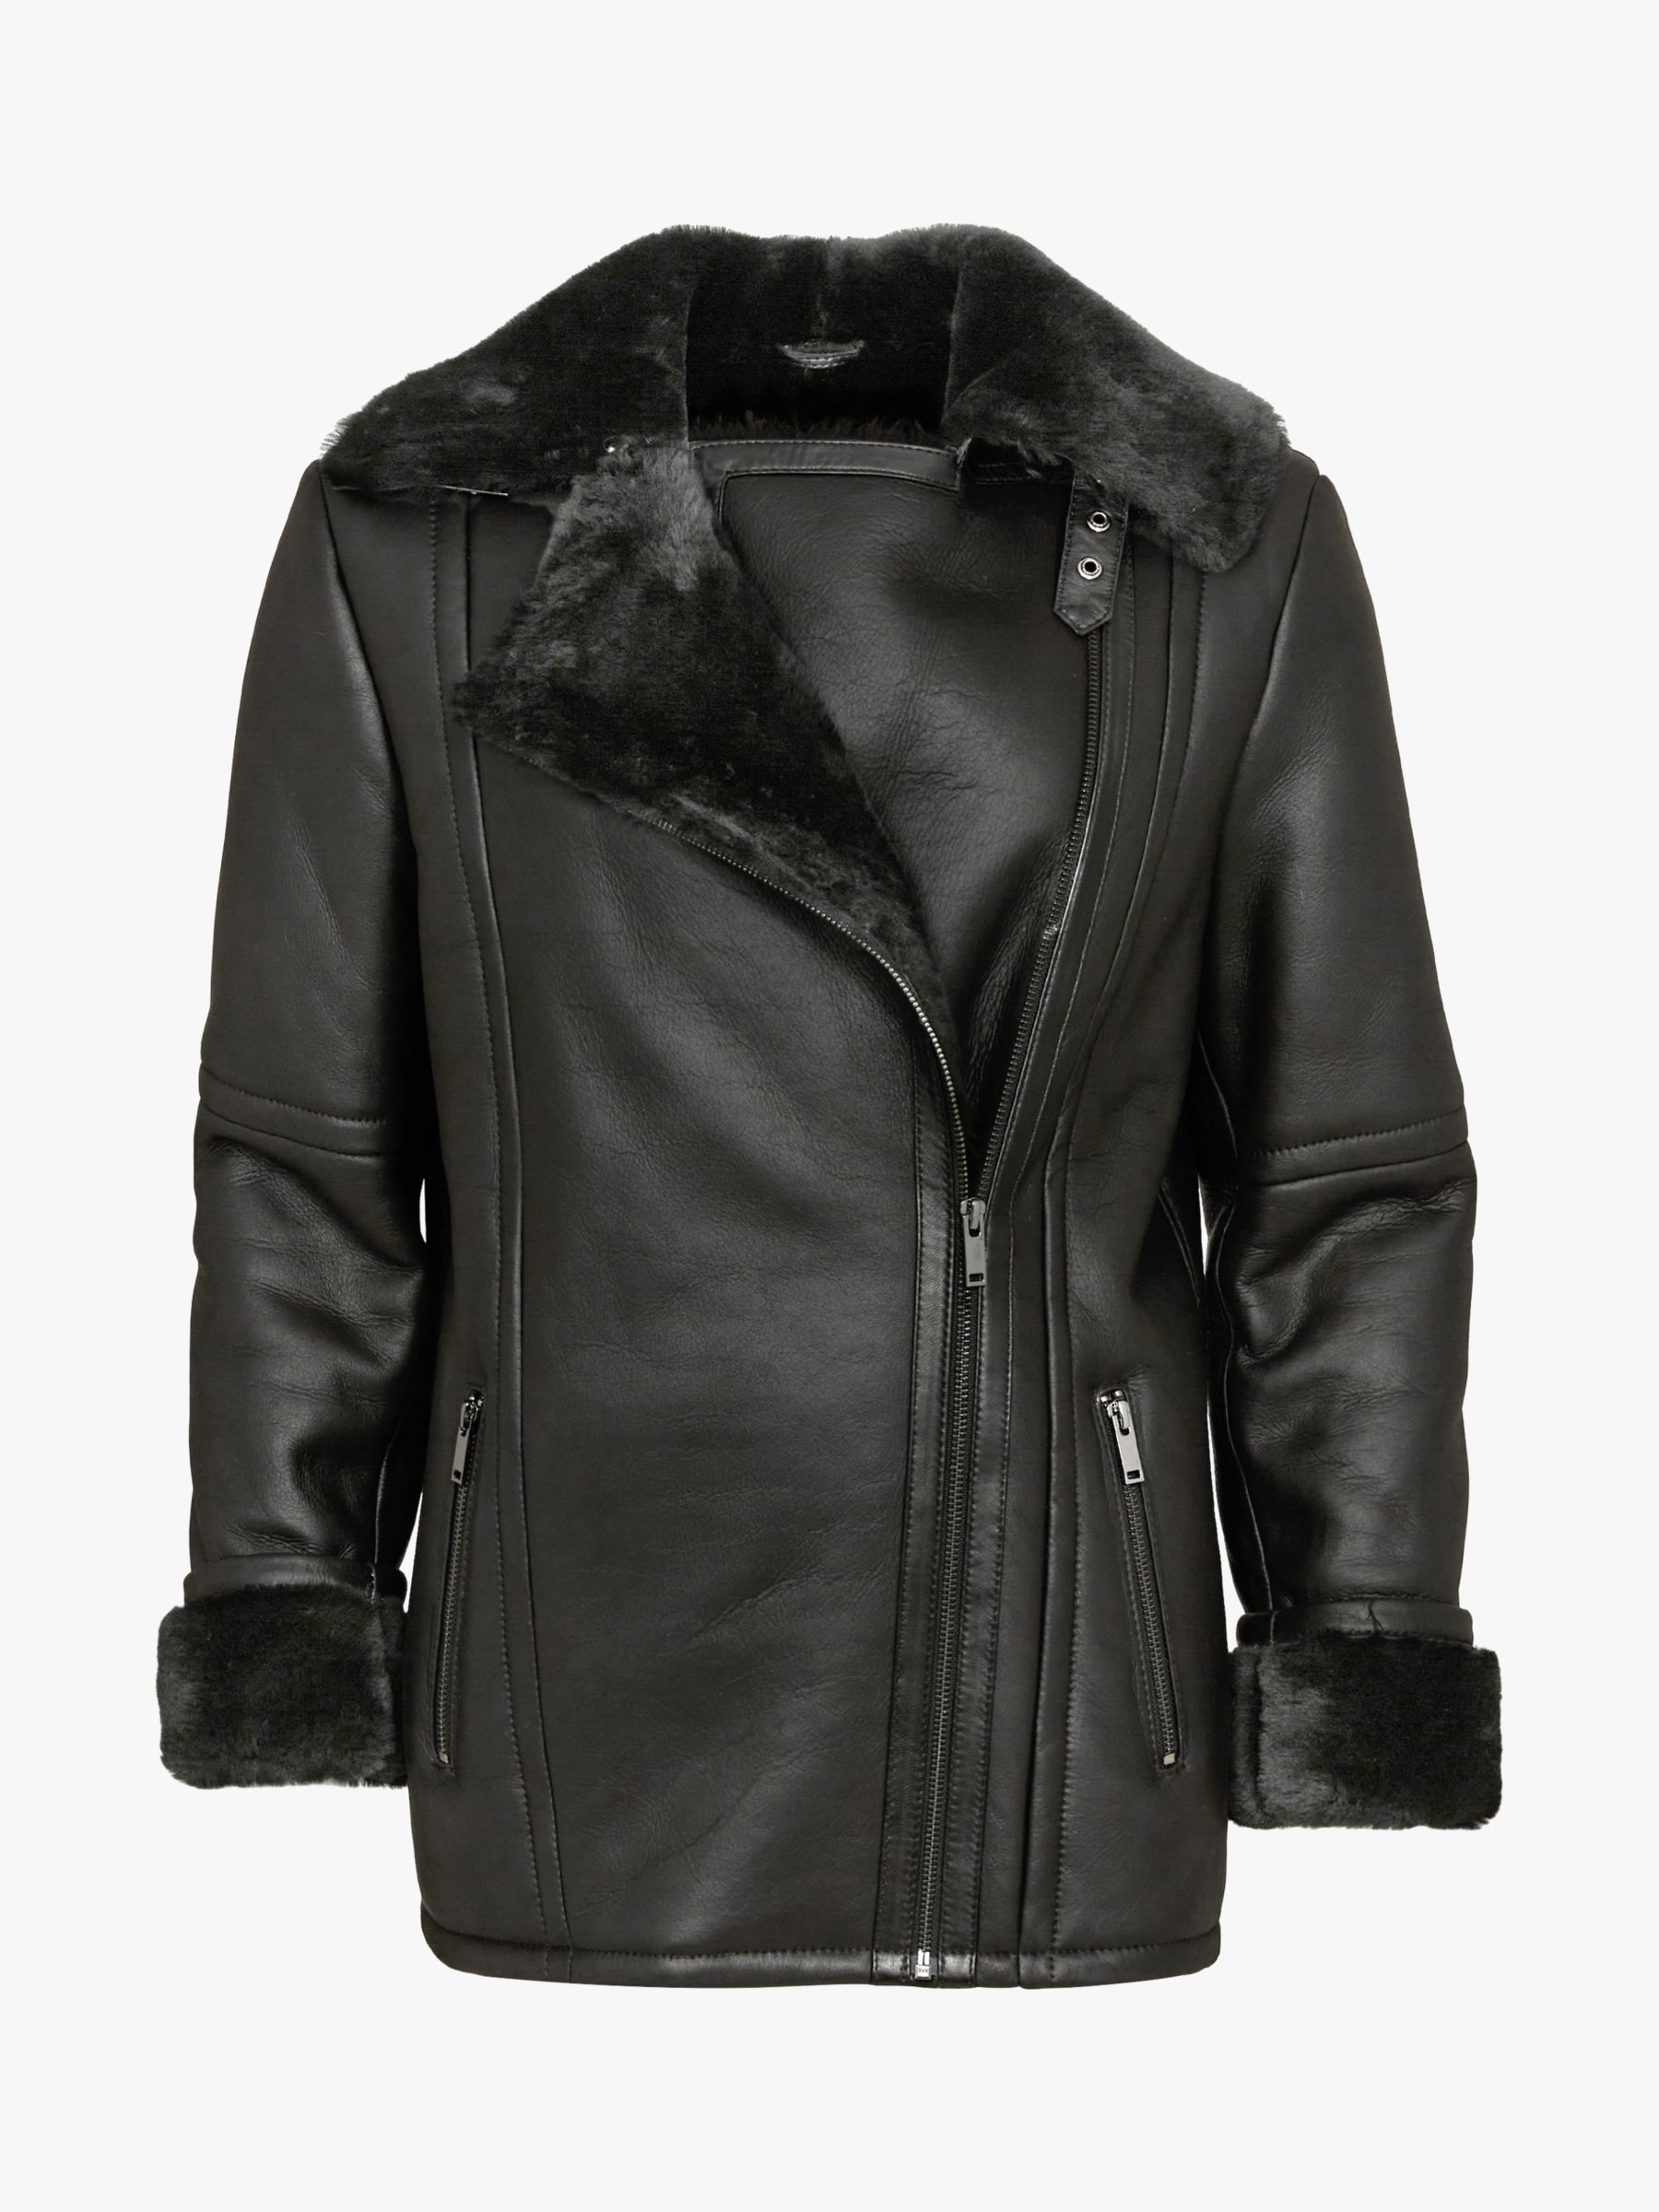 Celtic & Co. Leather Aviator Jacket, Black, 8